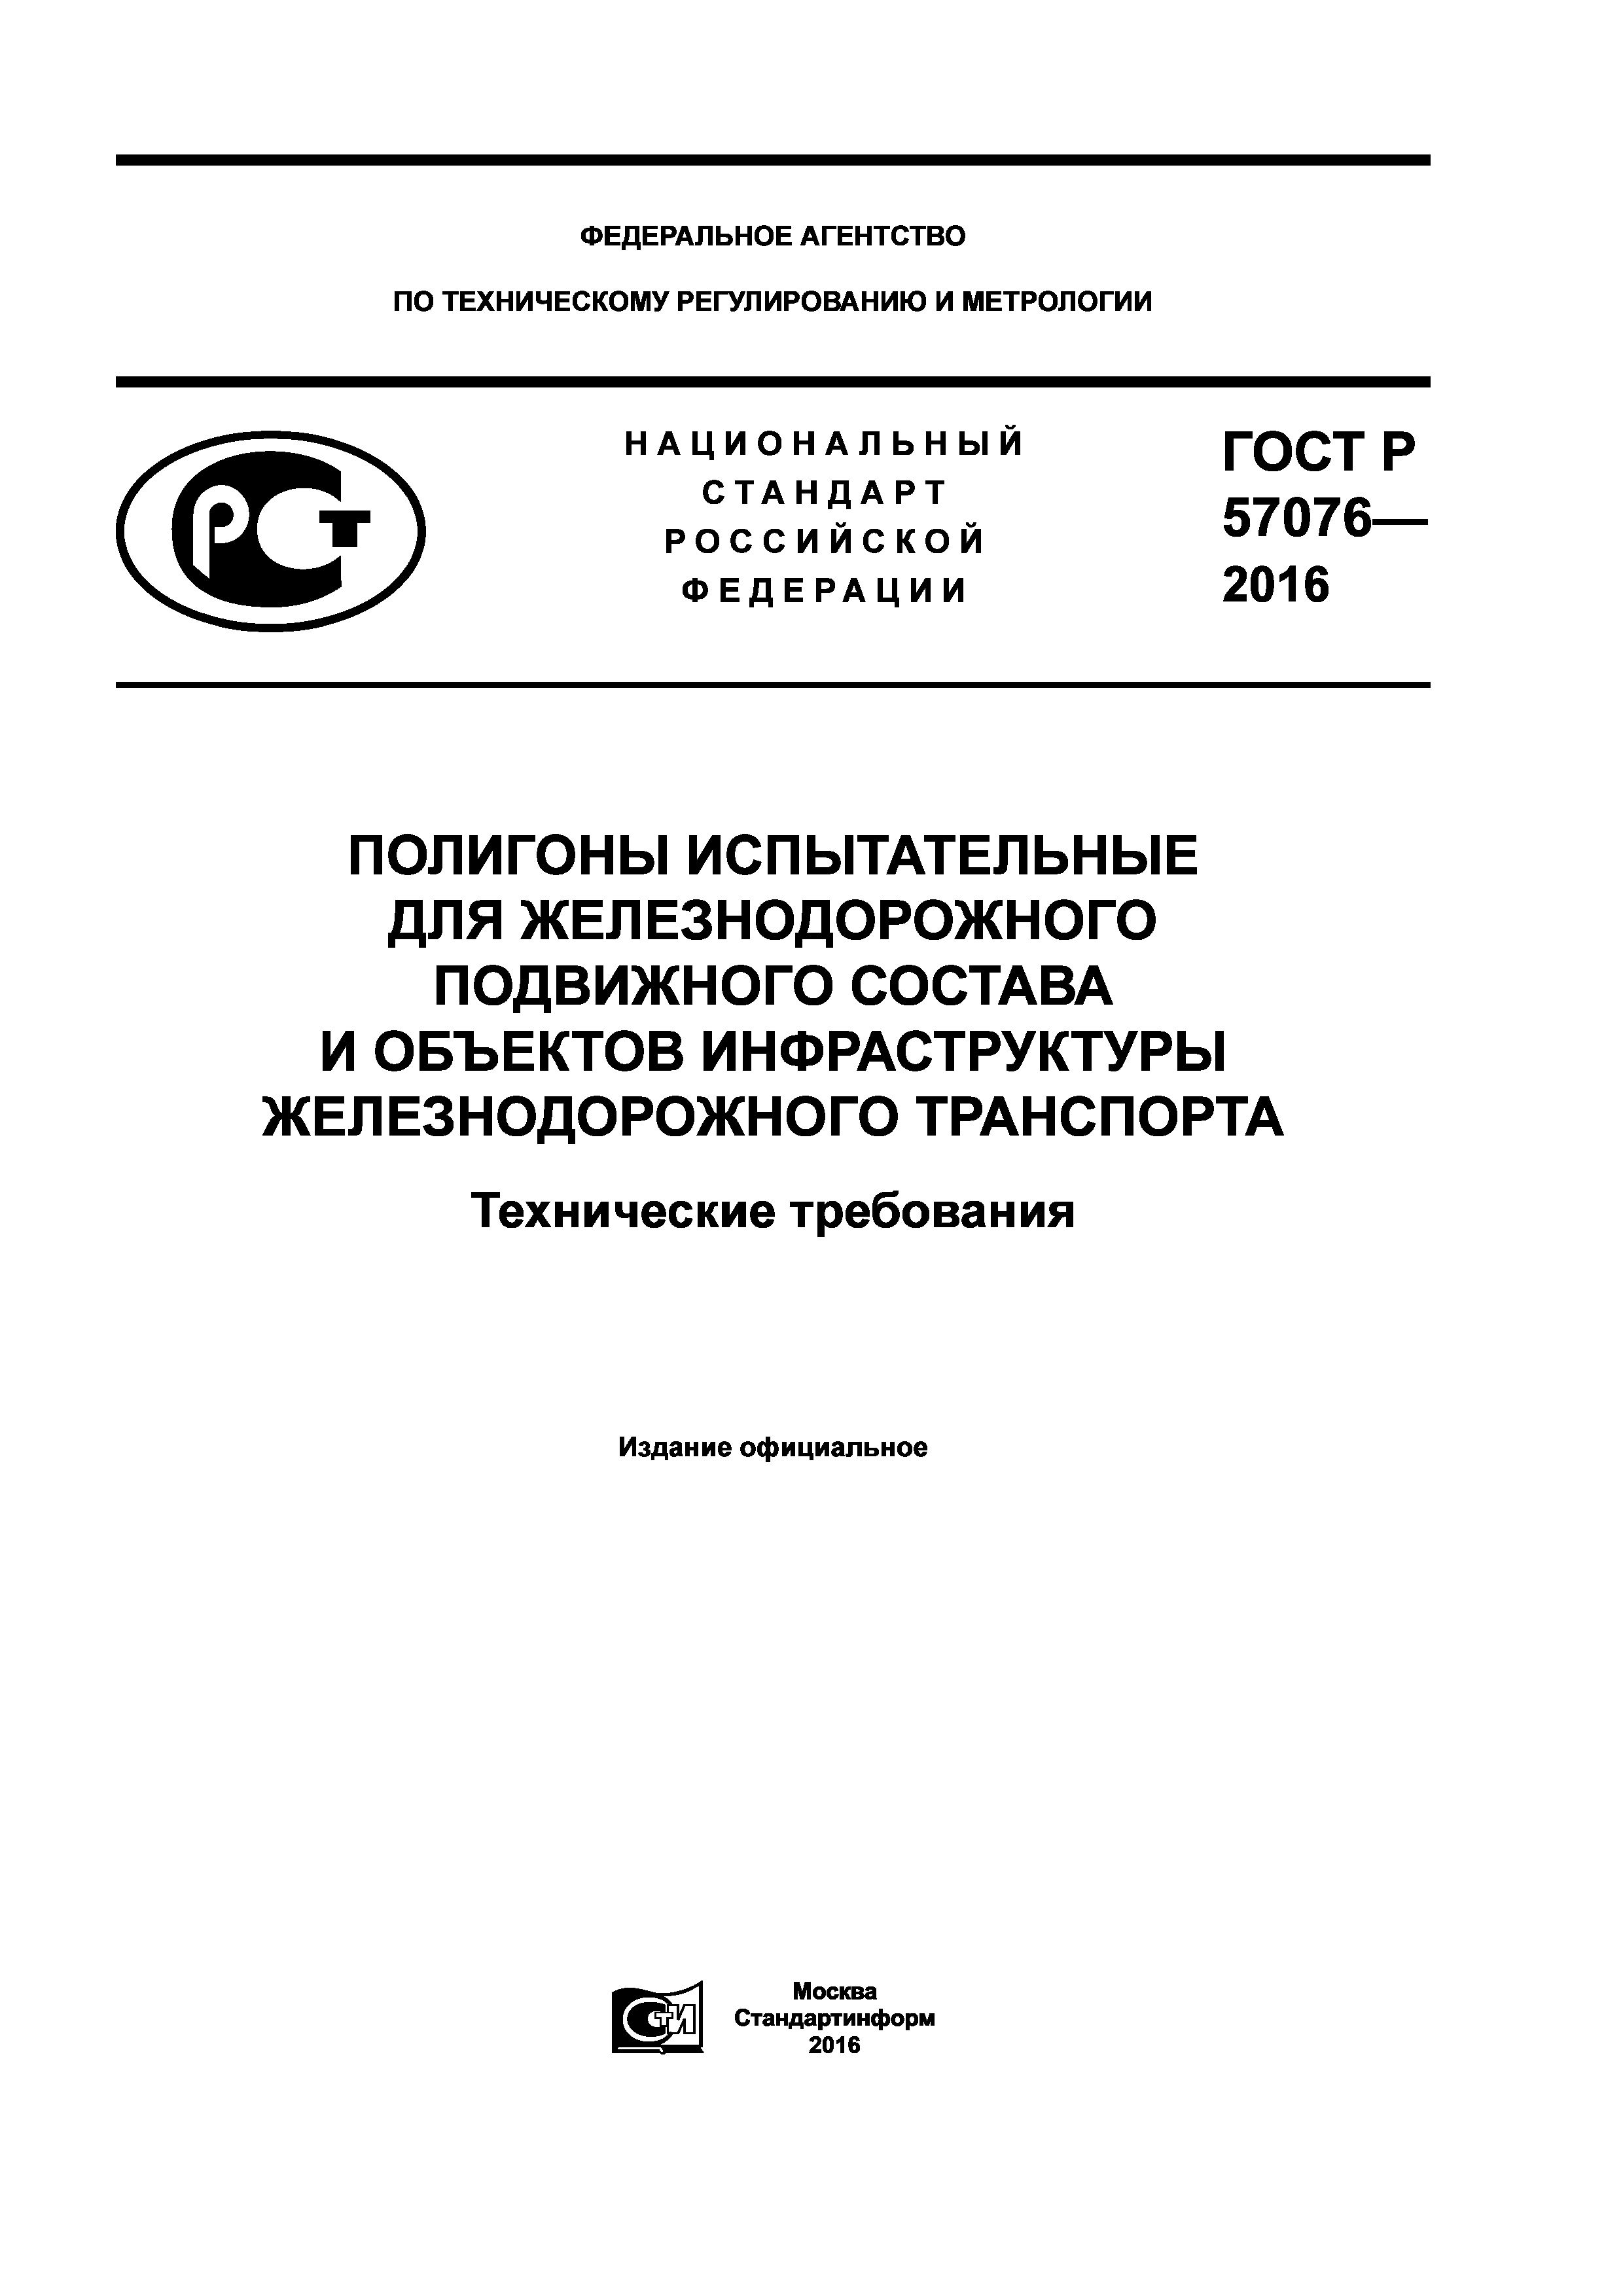 ГОСТ Р 57076-2016